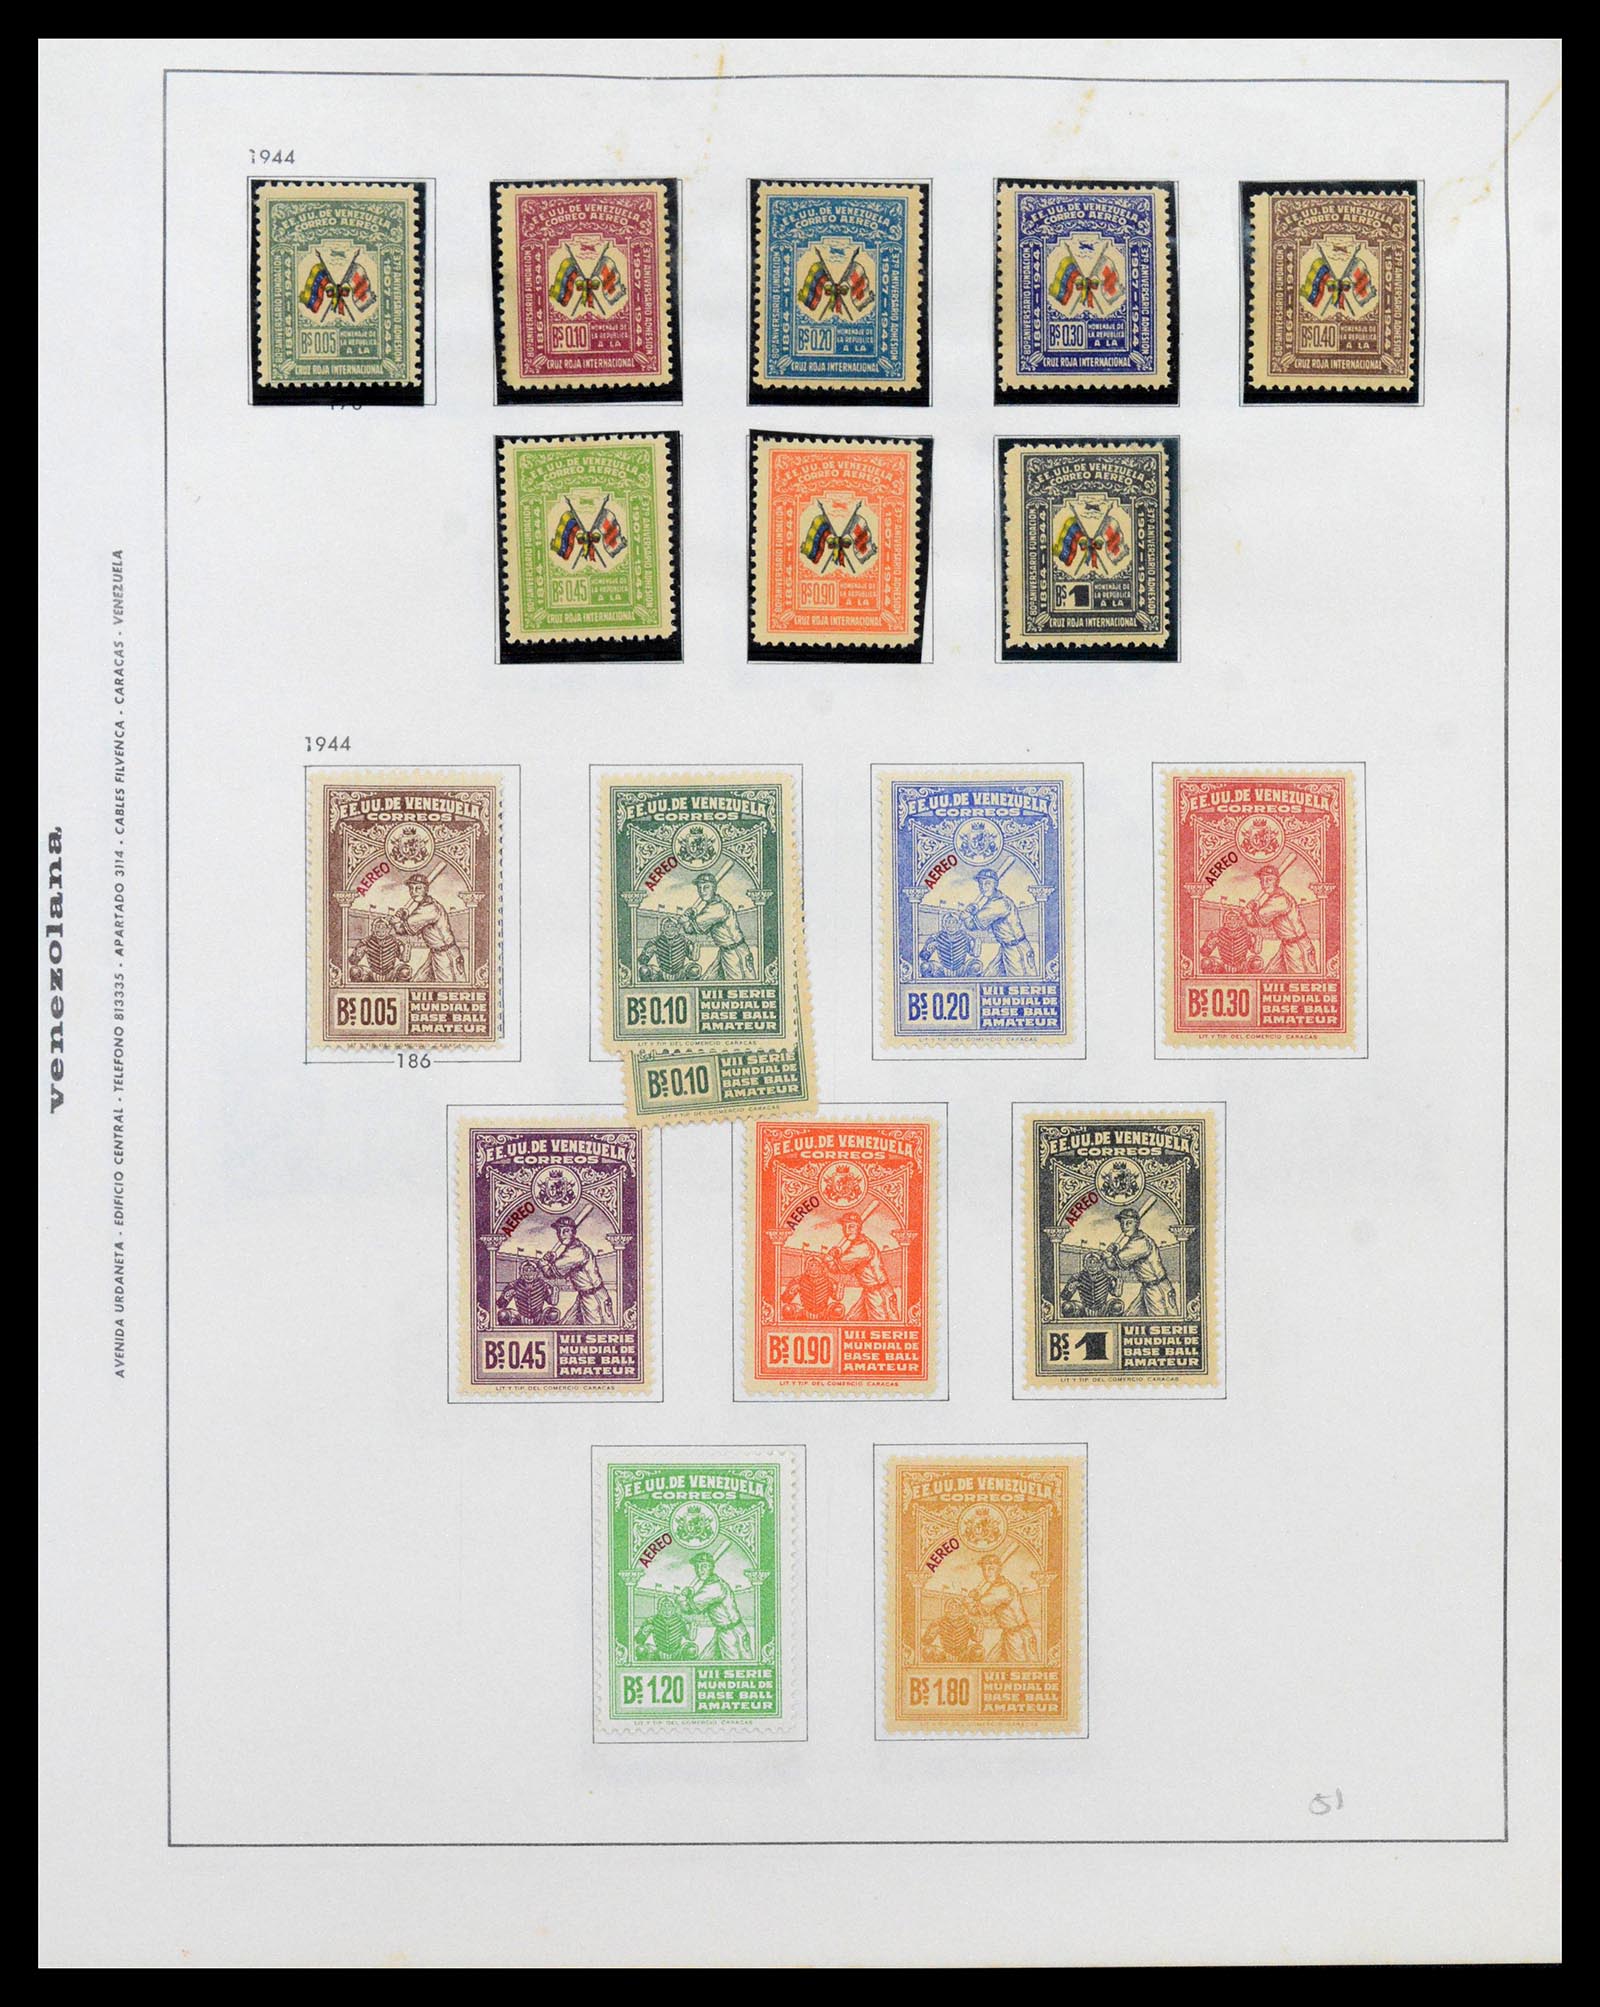 39436 0013 - Stamp collection 39436 Venezuela 1859-1985.